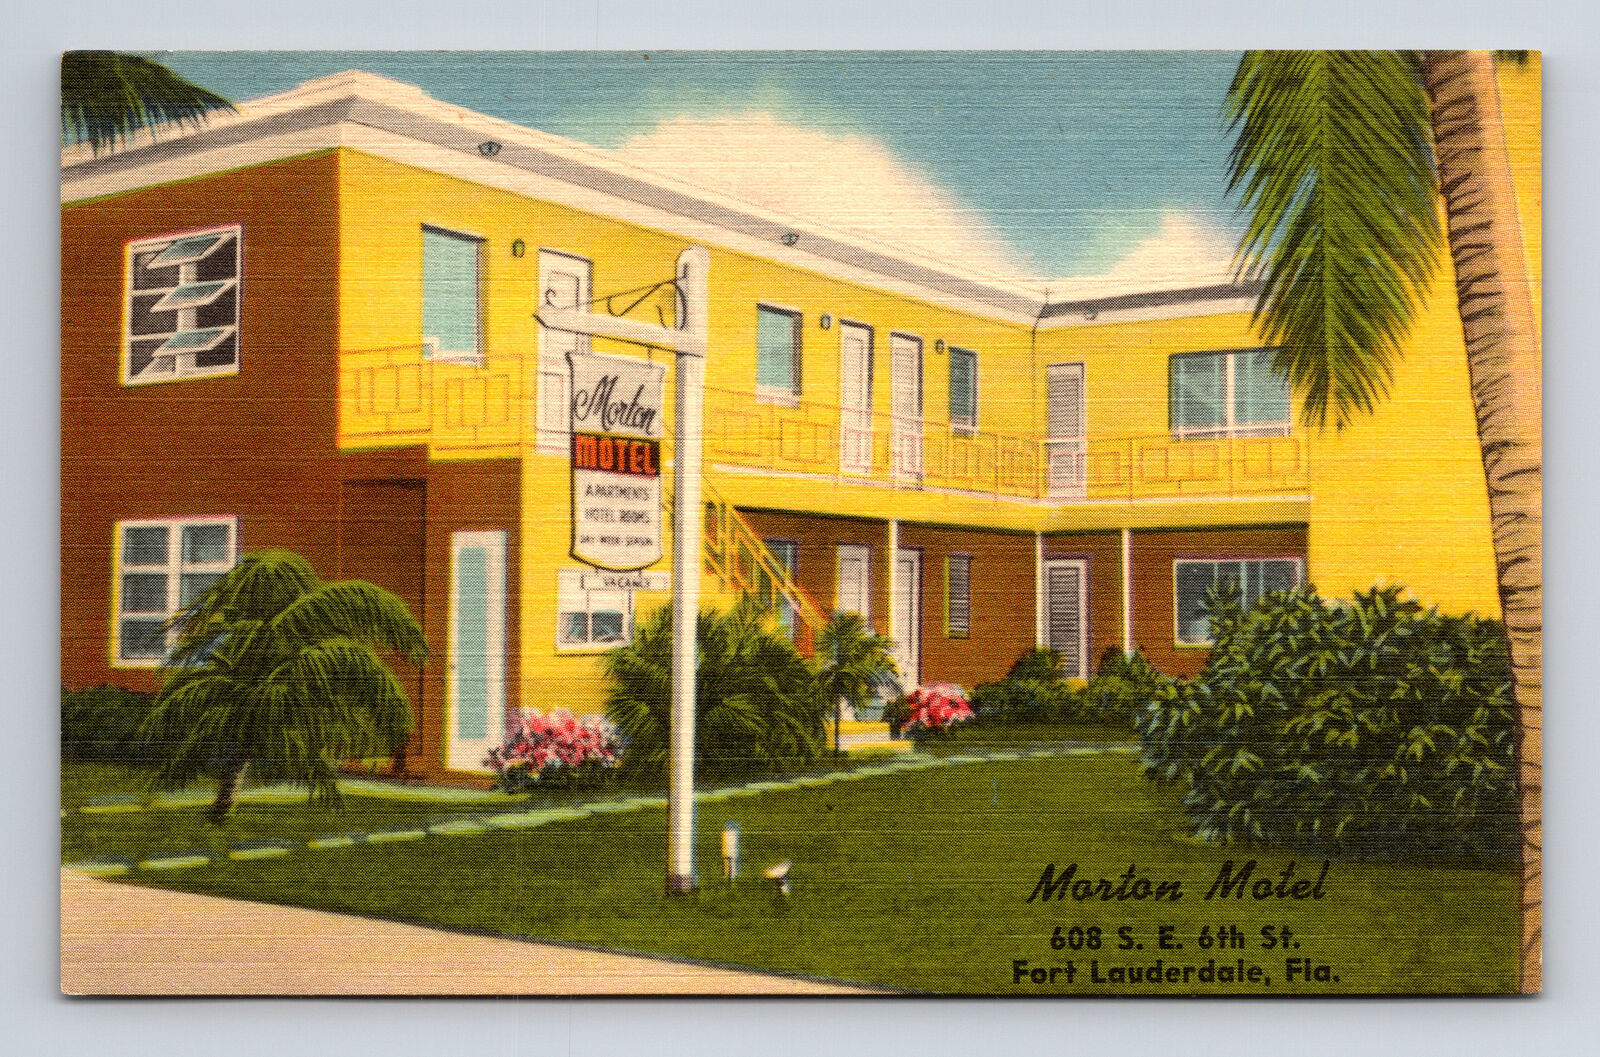 Morton Motel US 1 Fort Lauderdale Florida FL Roadside America Postcard